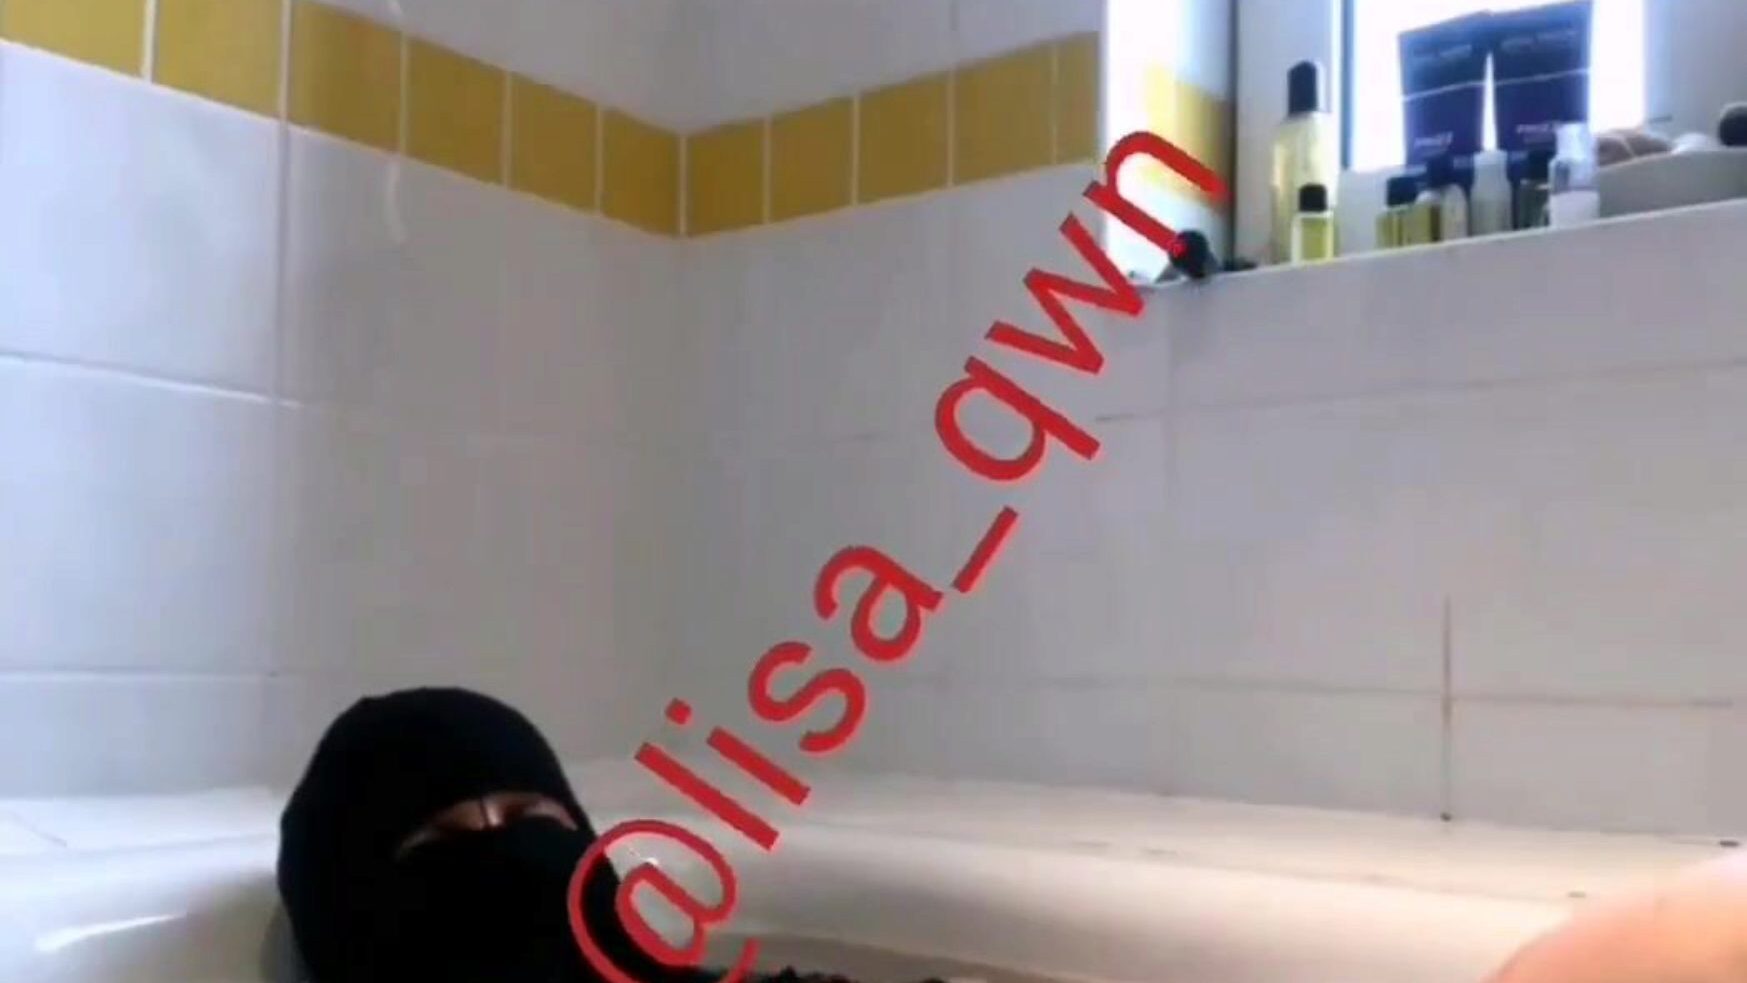 niqab hot 0998: besplatni vrući xnx hd porno video e7 - xhamster gledati niqab hot 0998 tube fuckfest video besplatno na xhamsteru, s dominantnom kolekcijom arapskih vrućih xnx, milf i vrućih crvenih cijelih hd porno videa